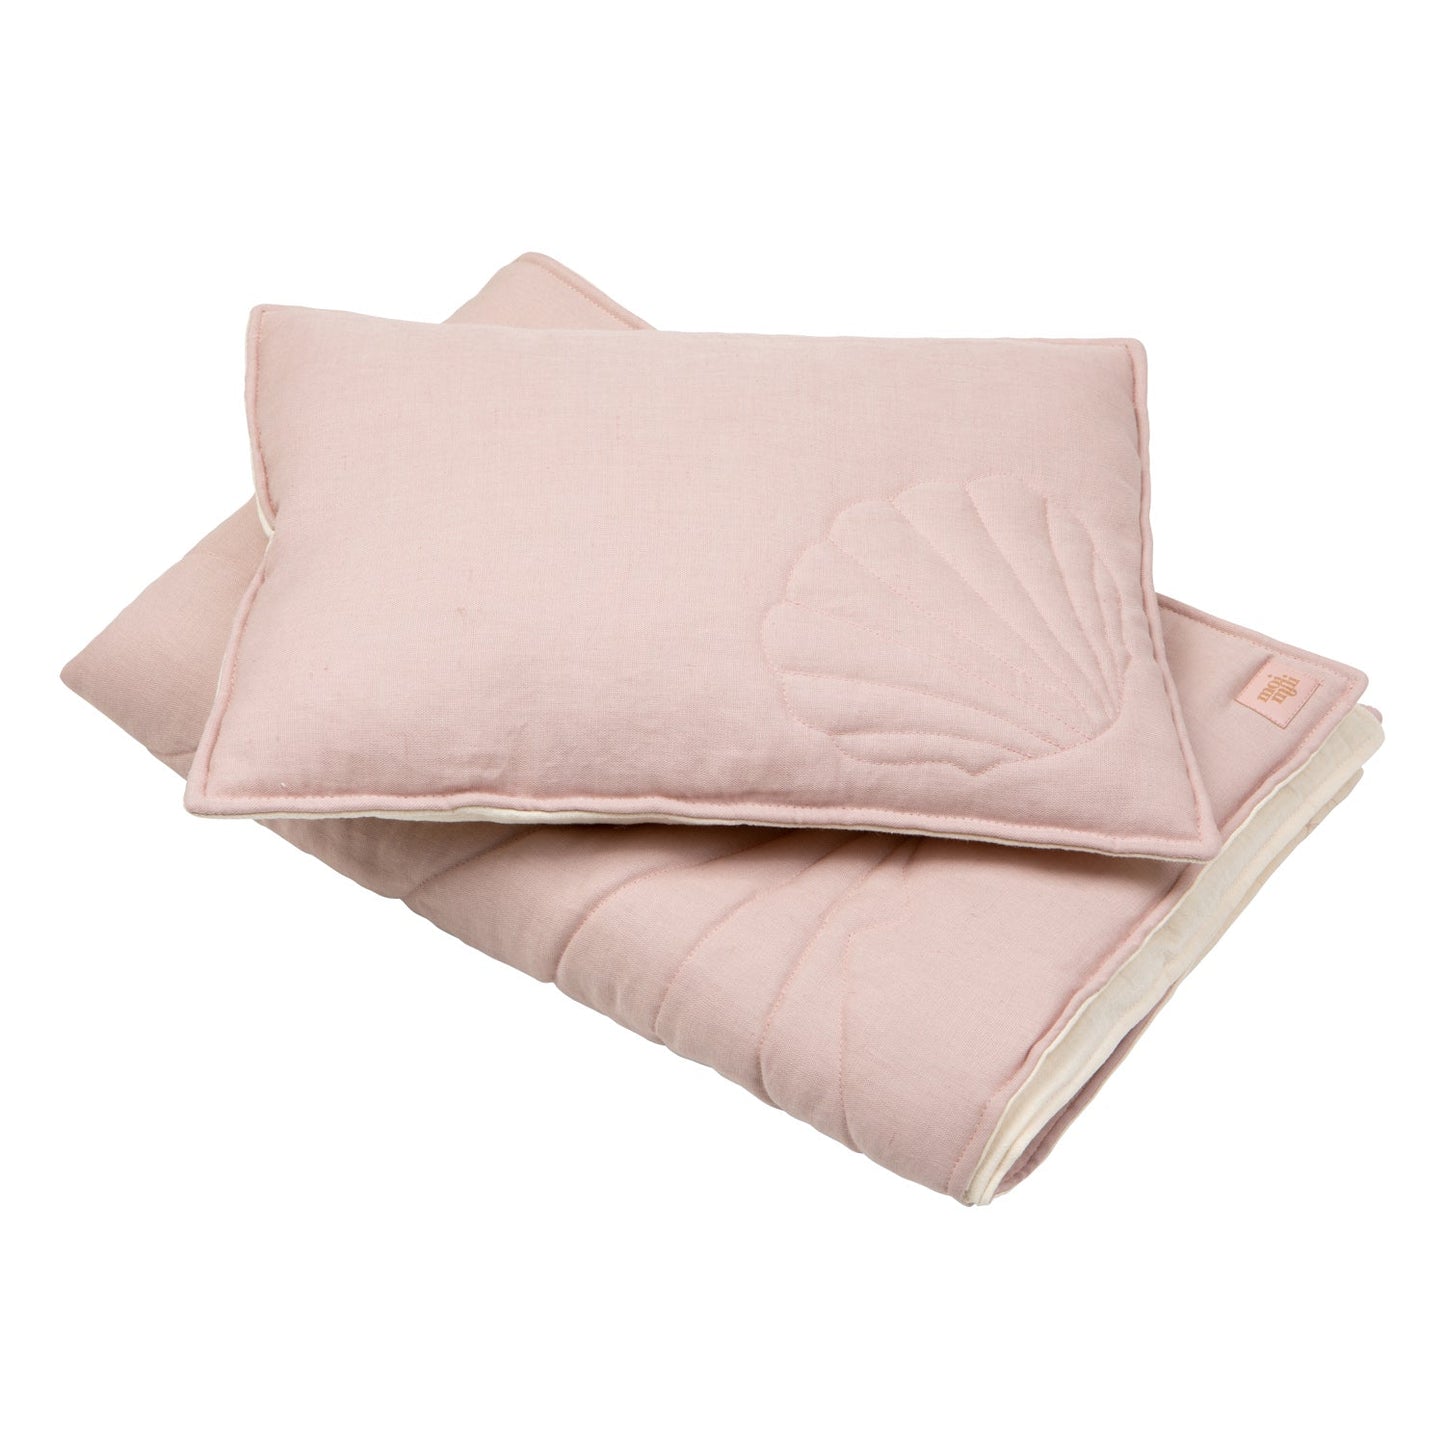 Linen "Powder Pink" Shell Child Cover Set